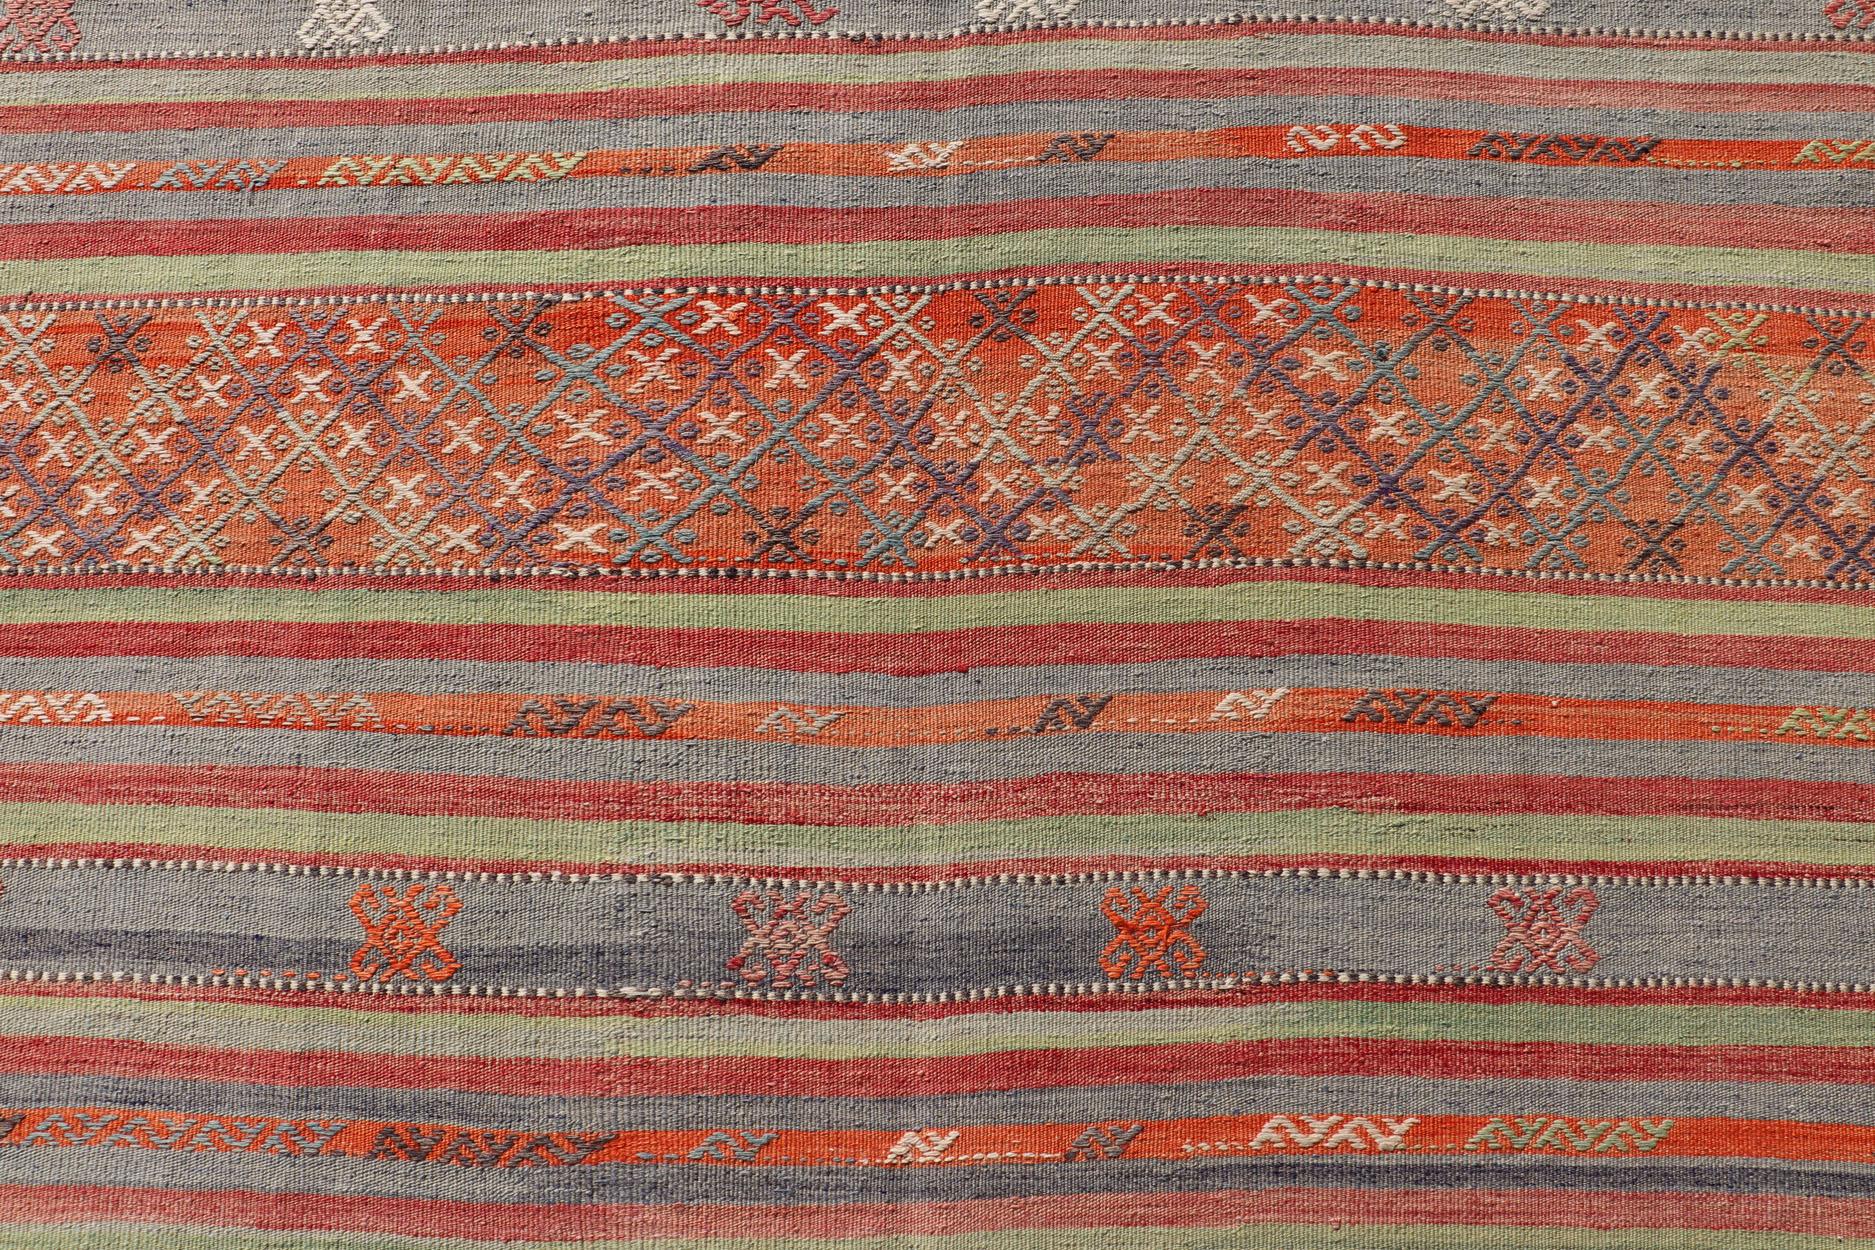 Multicolored Vintage Turkish Large Kilim Rug with Stripes Design 4